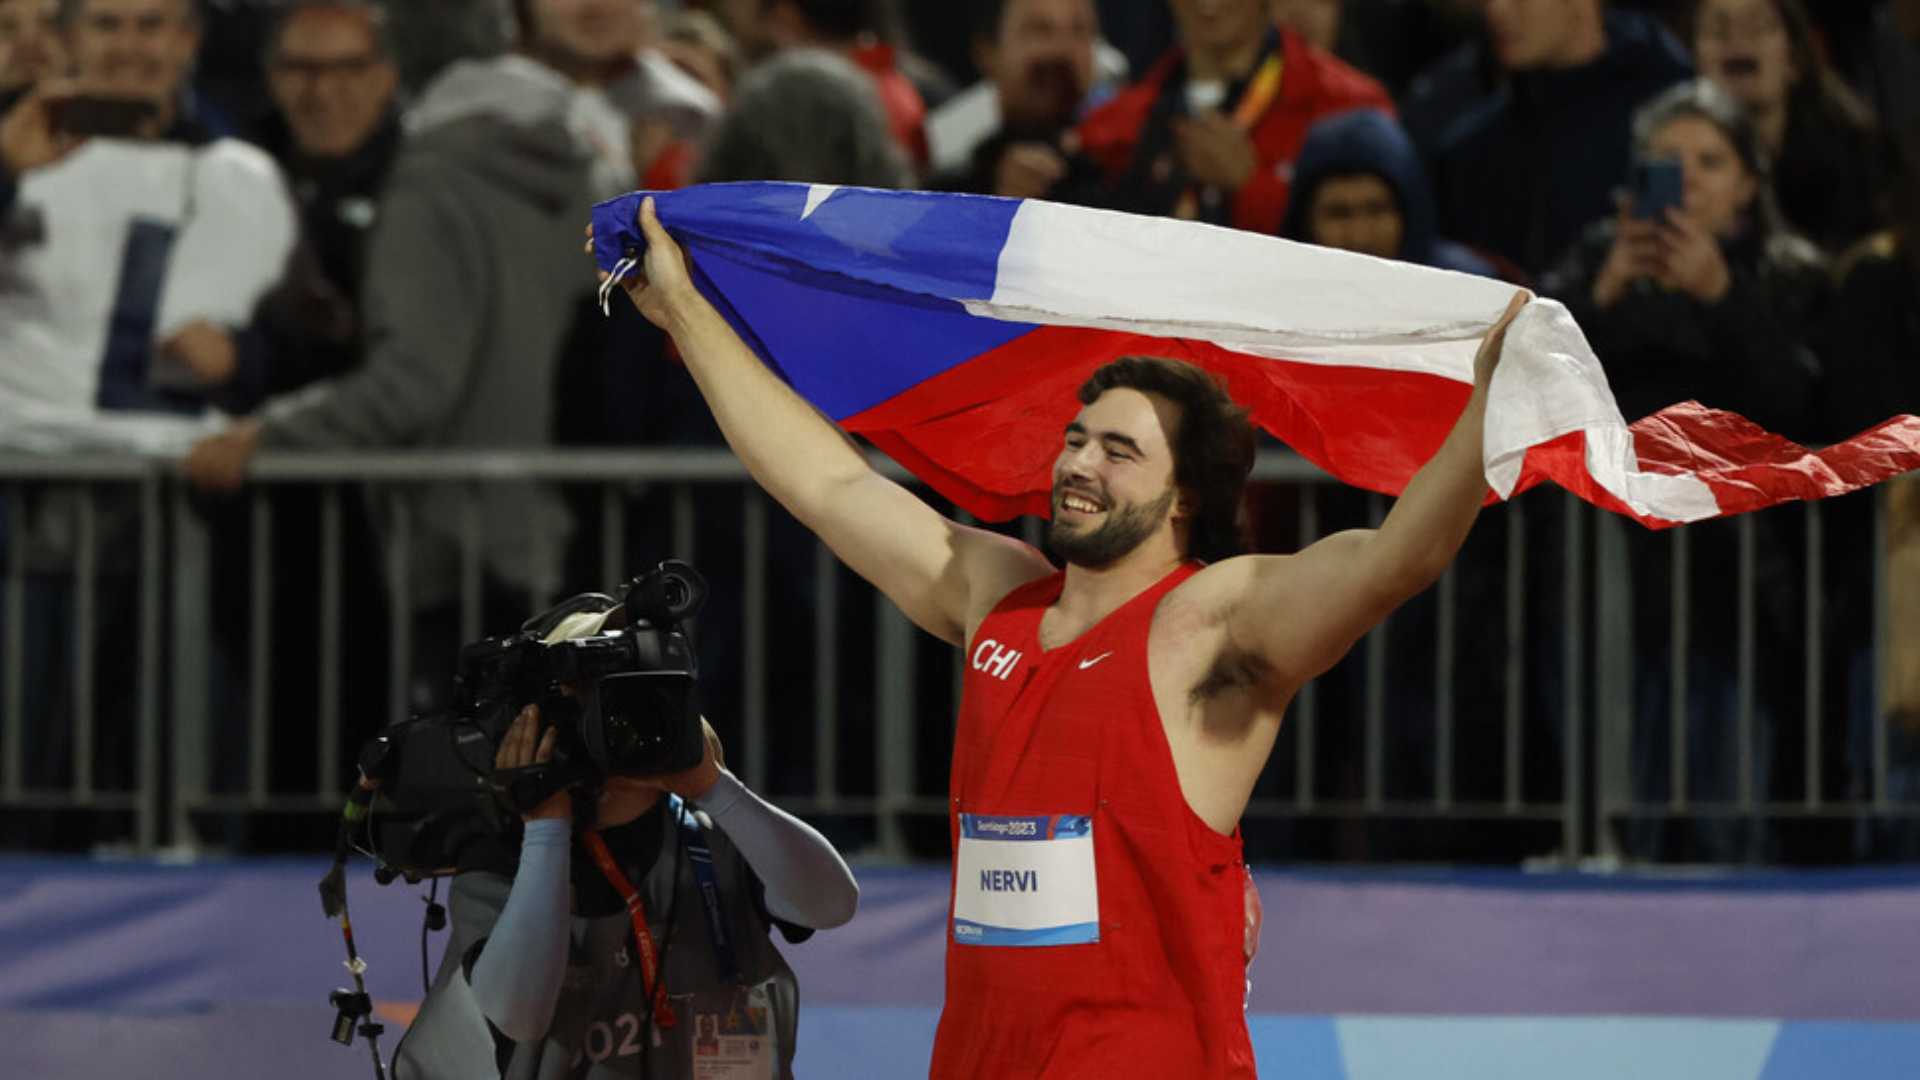 Lucas Nervi le da el primer oro a Chile en atletismo